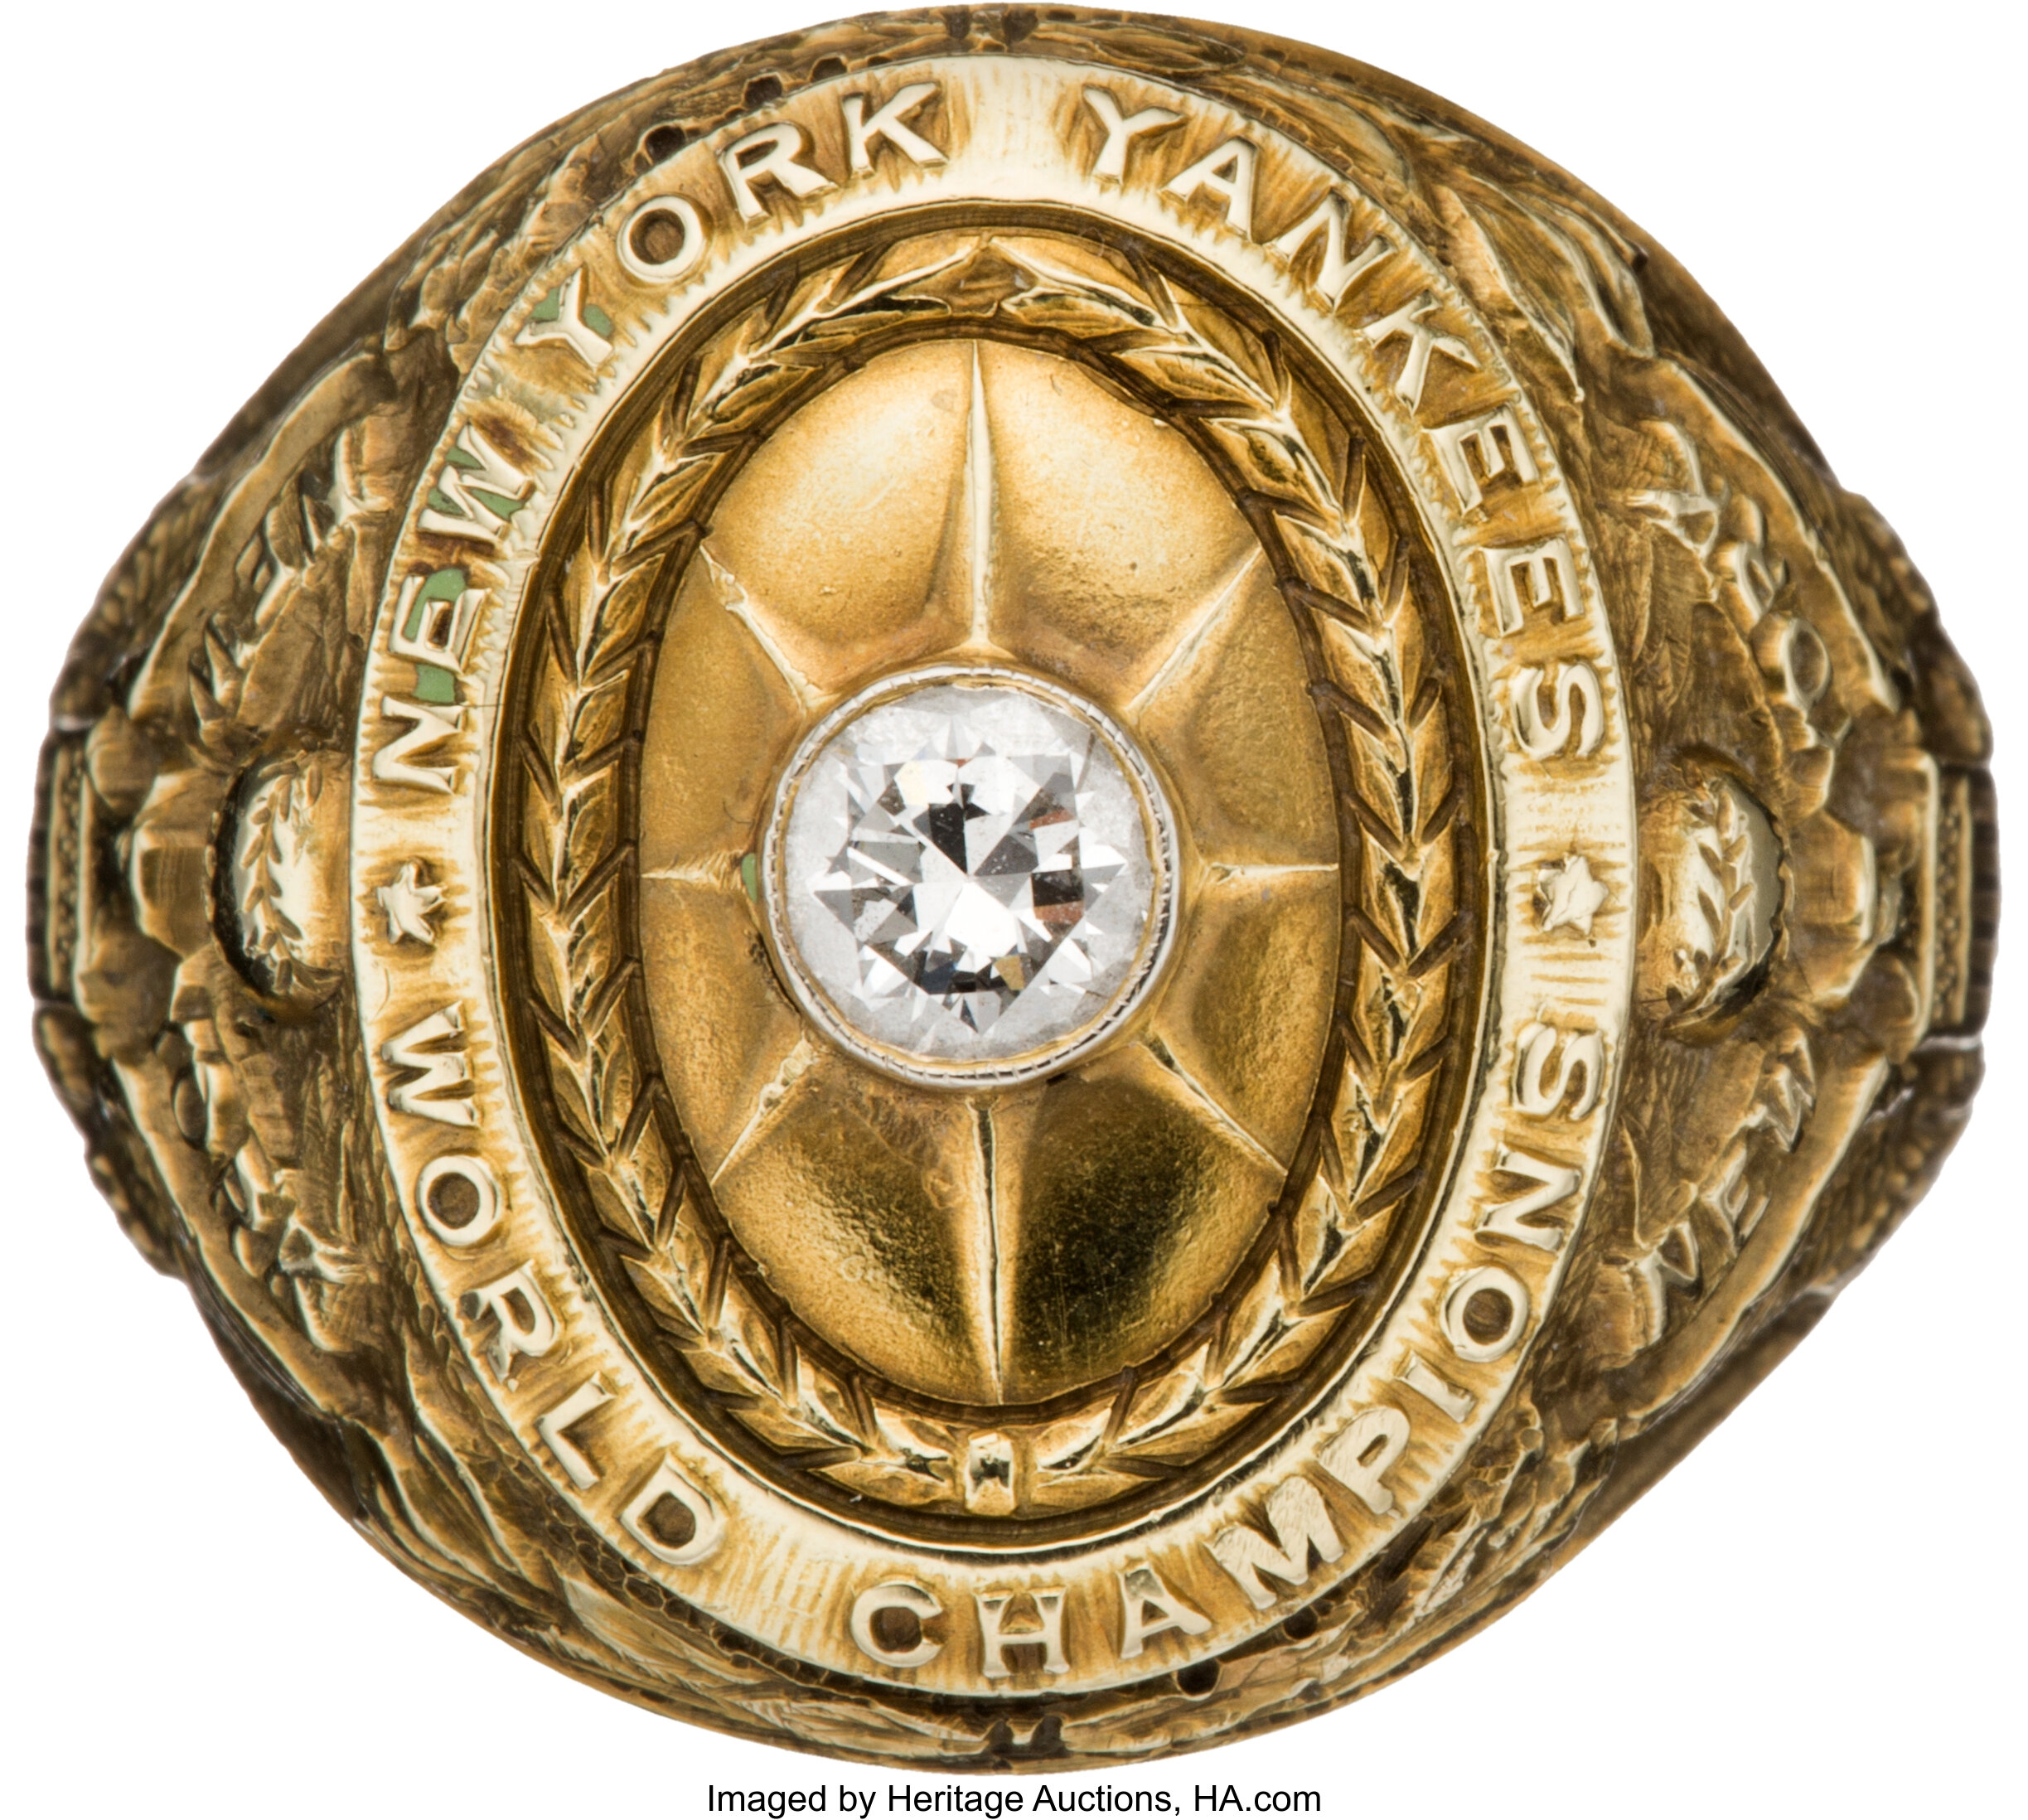 1927 New York Yankees World Championship Ring Presented to Herb